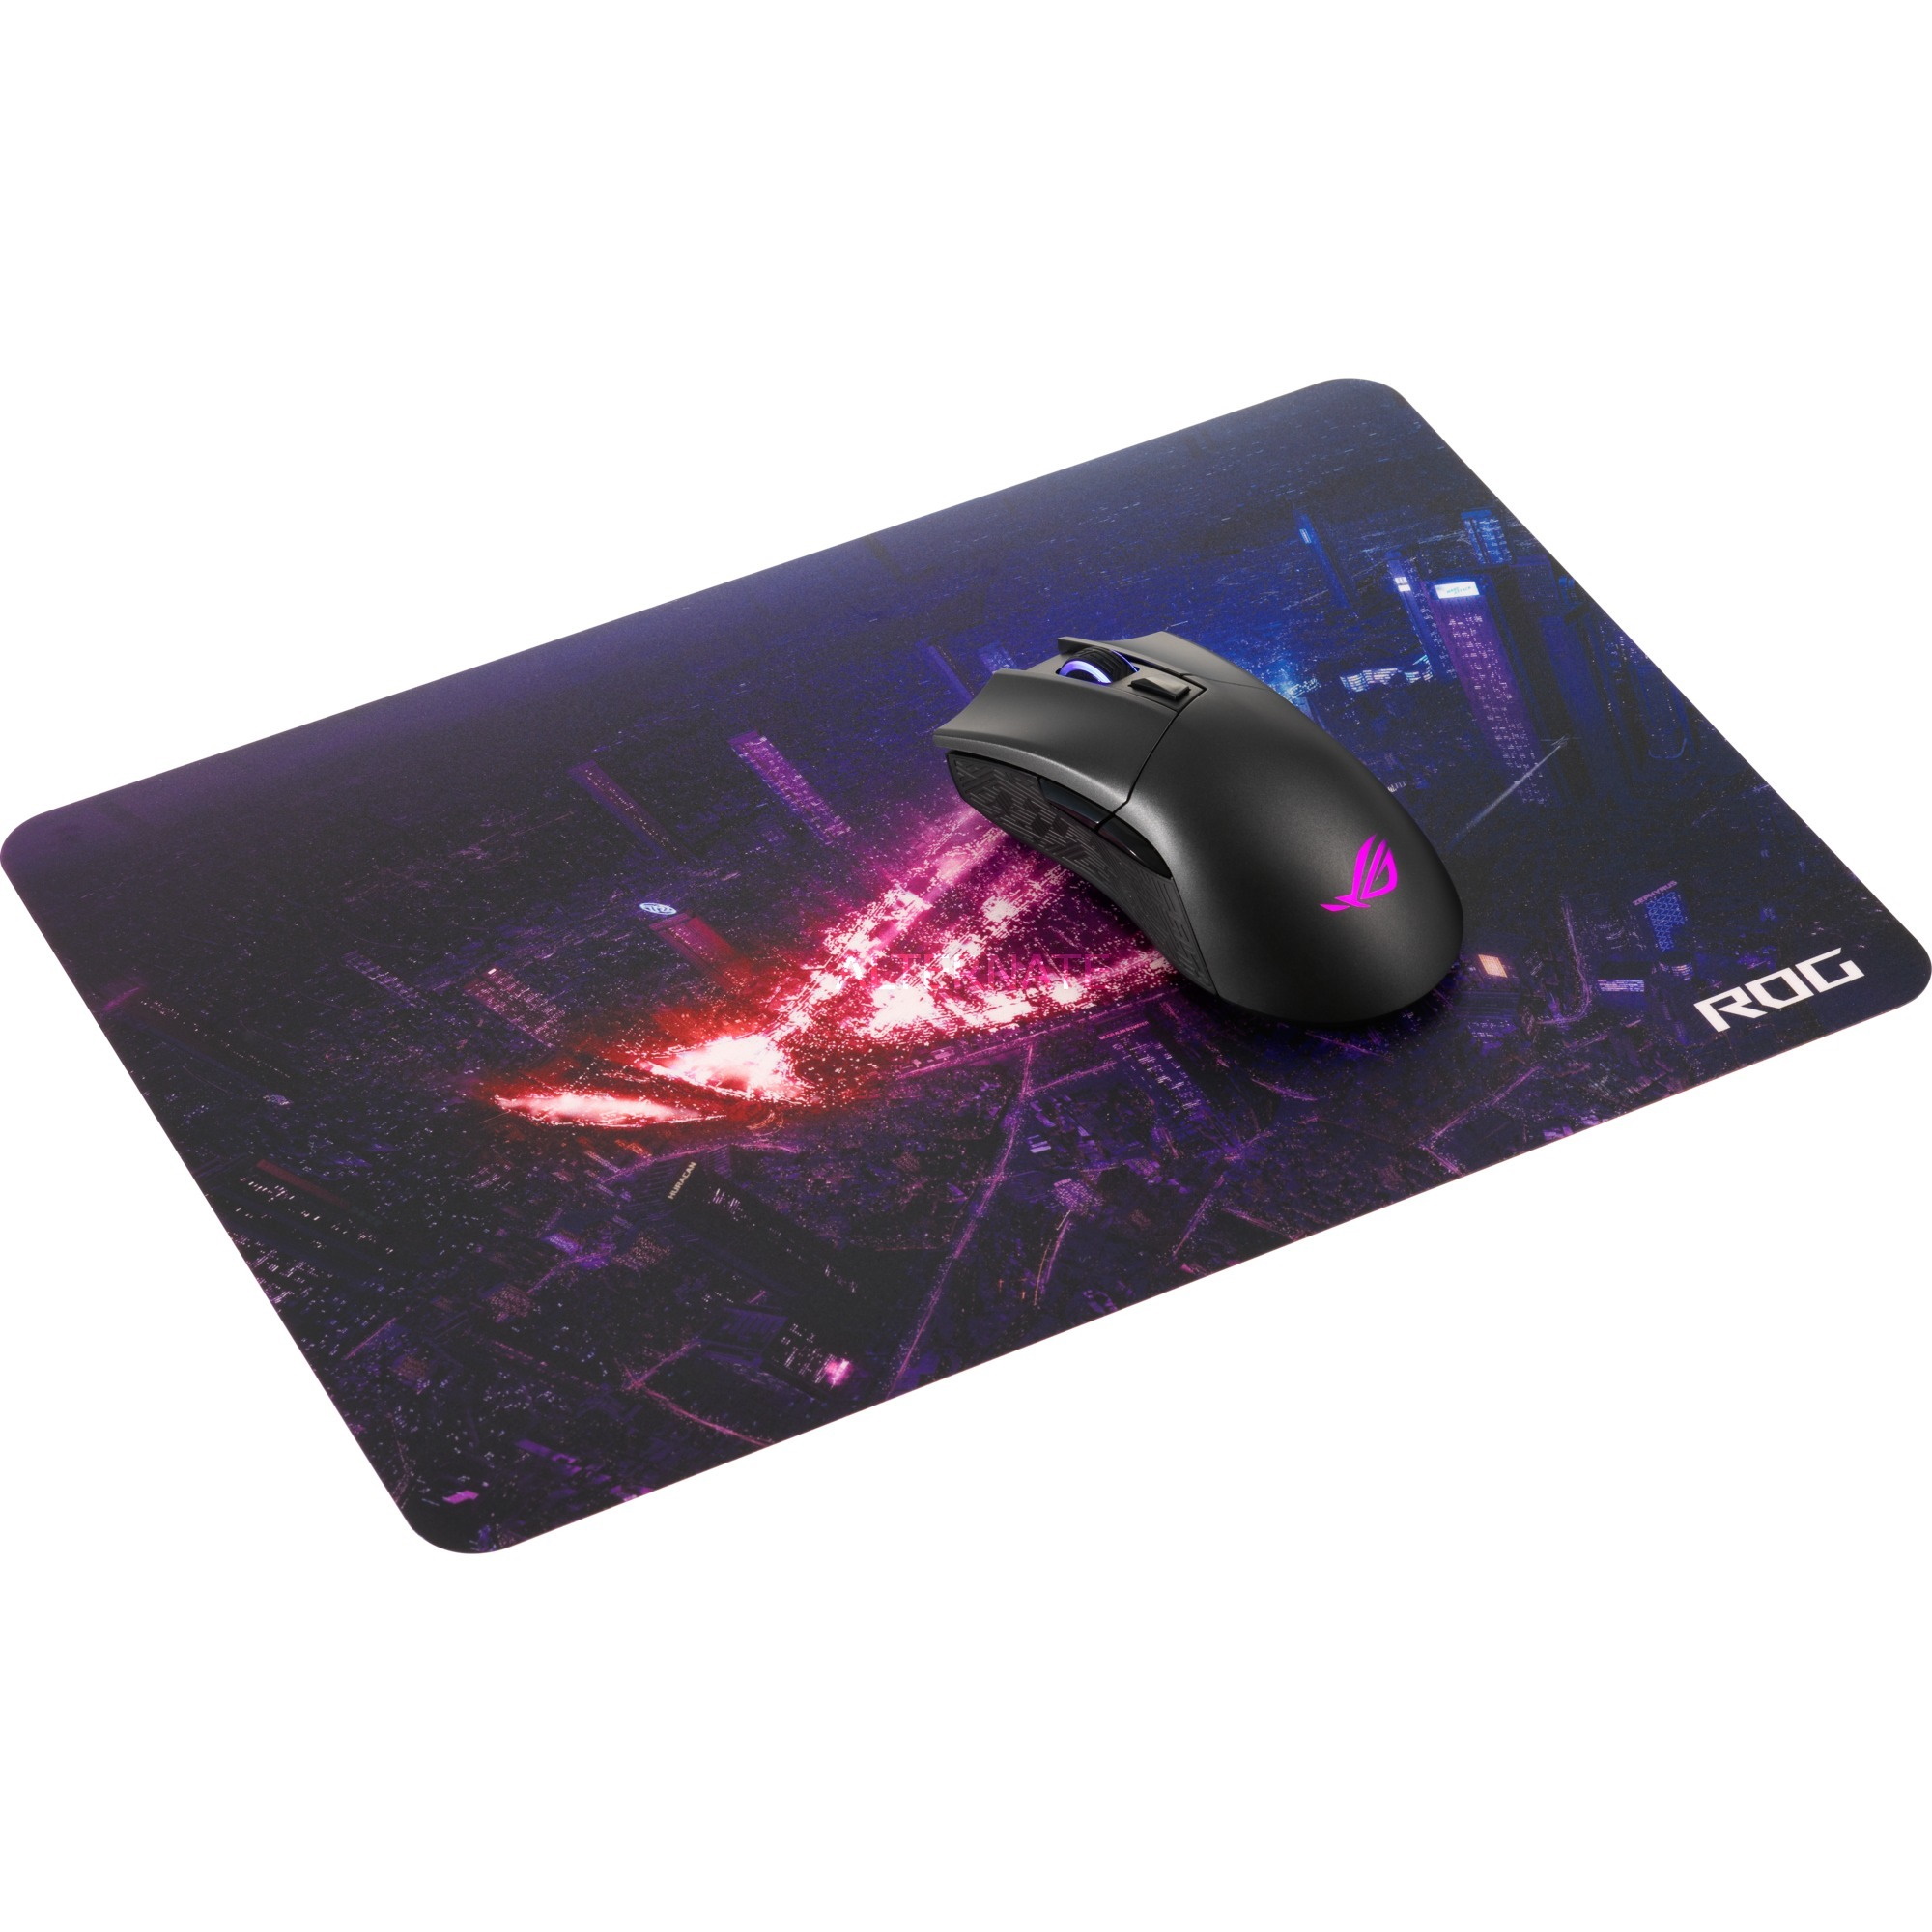 Asus Rog Strix Slice Gaming Mouse Pad Multi Color